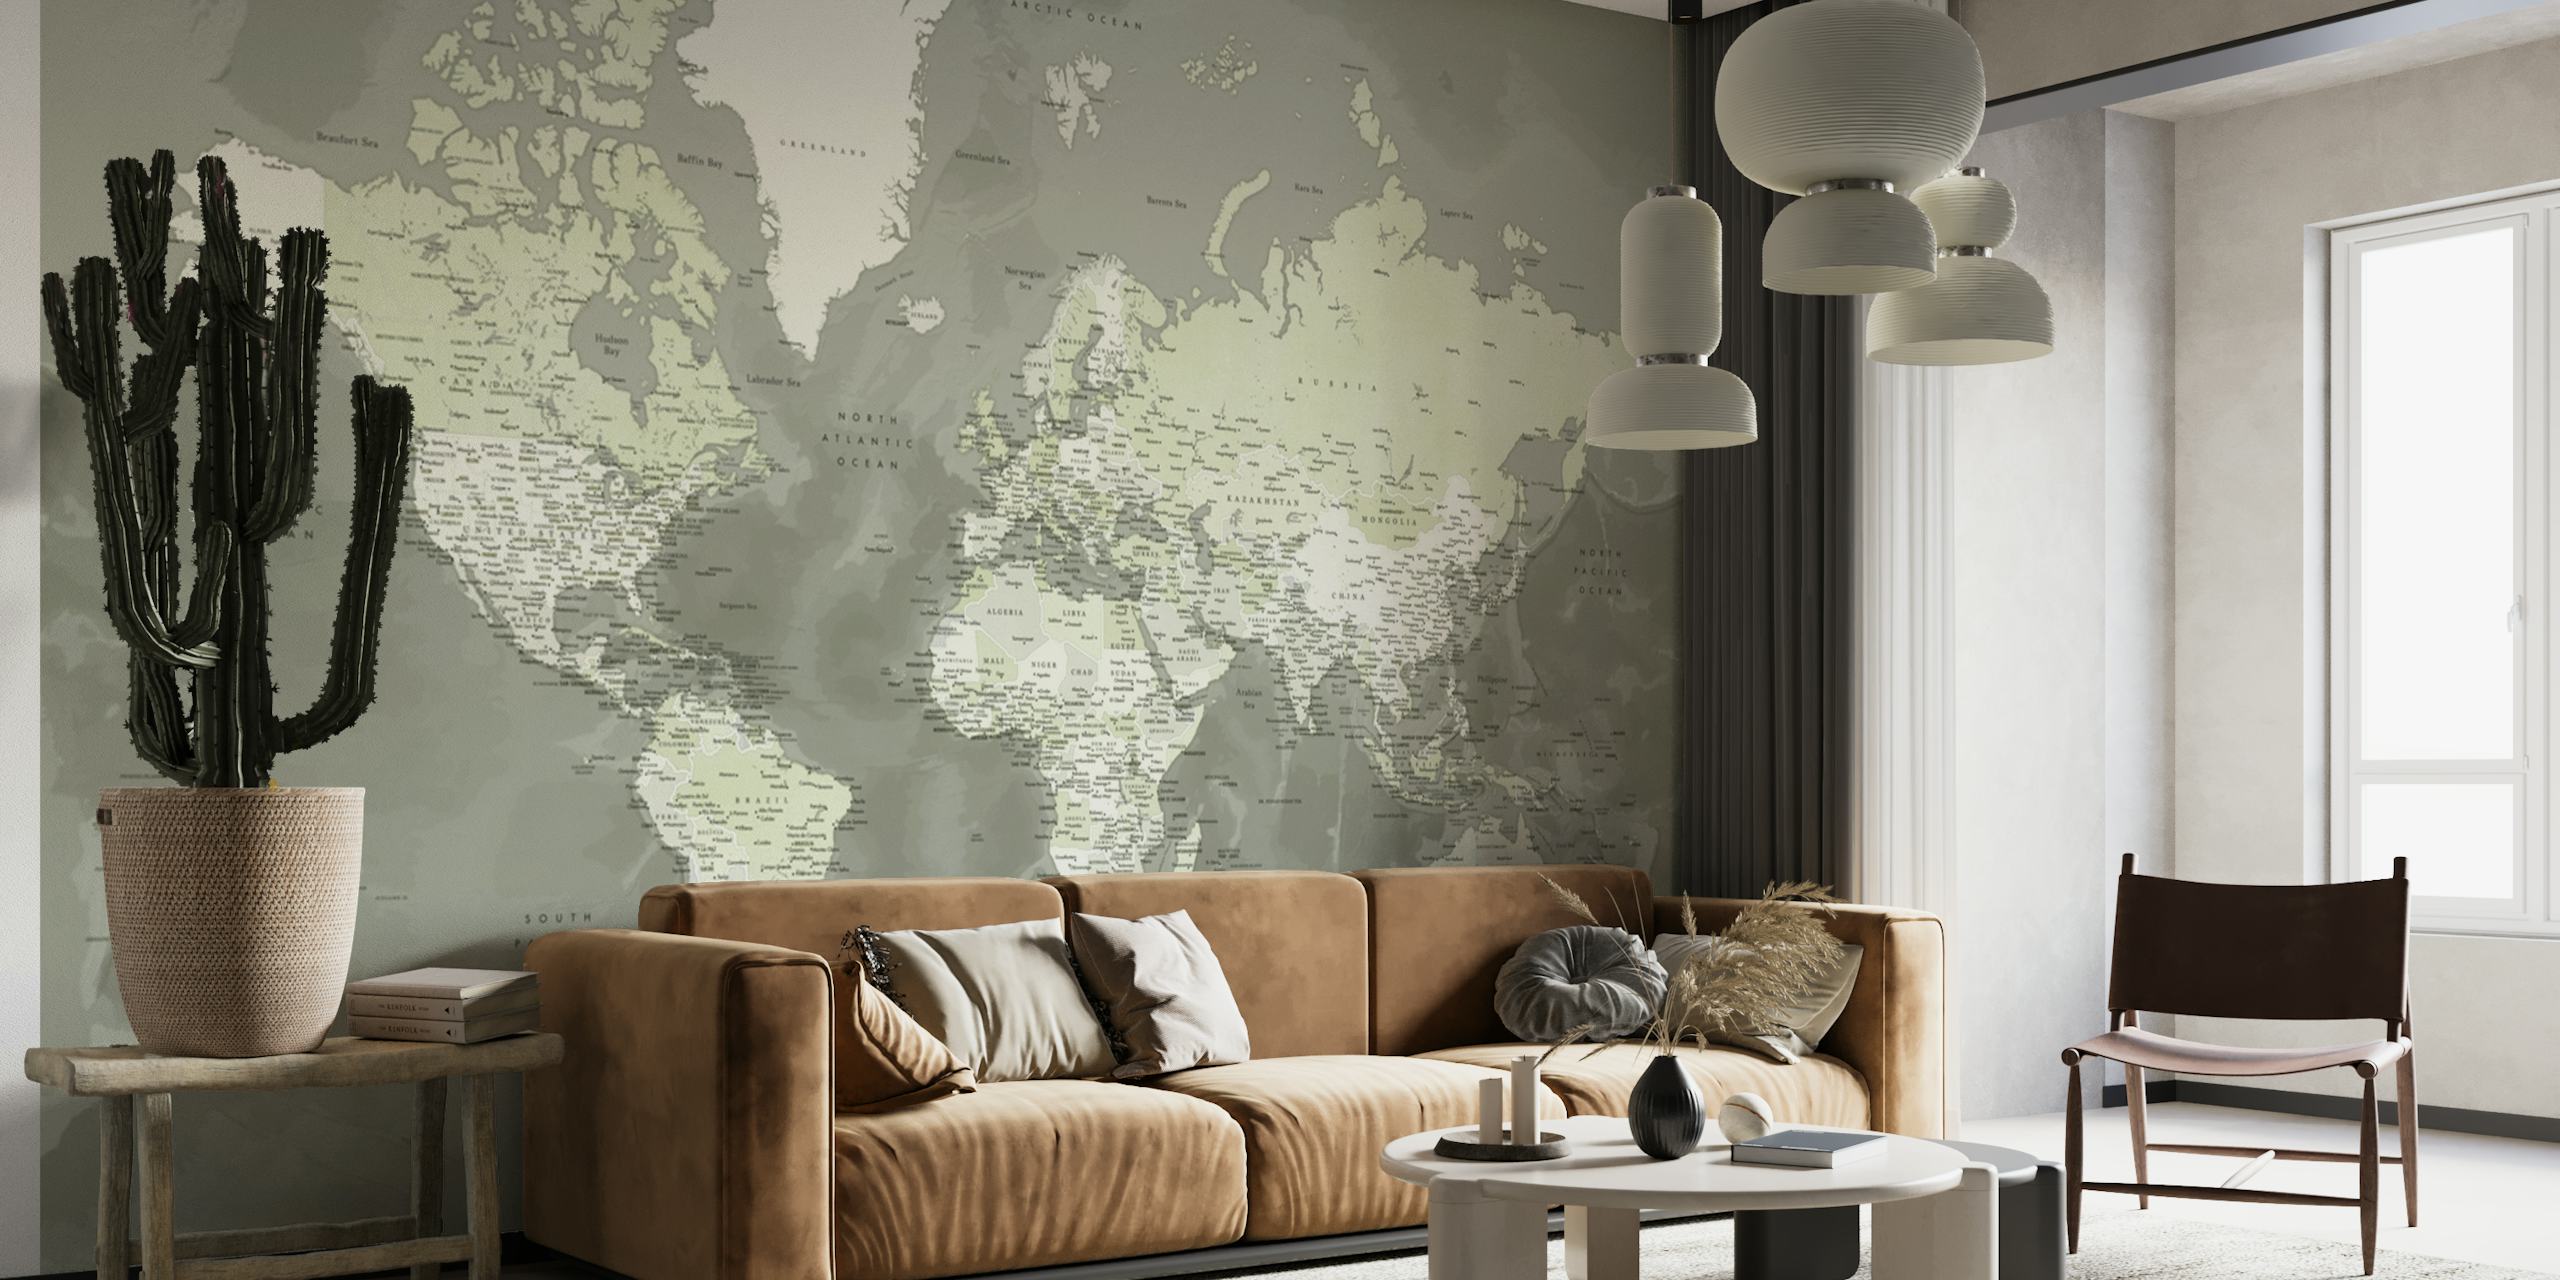 Detailed world map Faolan papel pintado